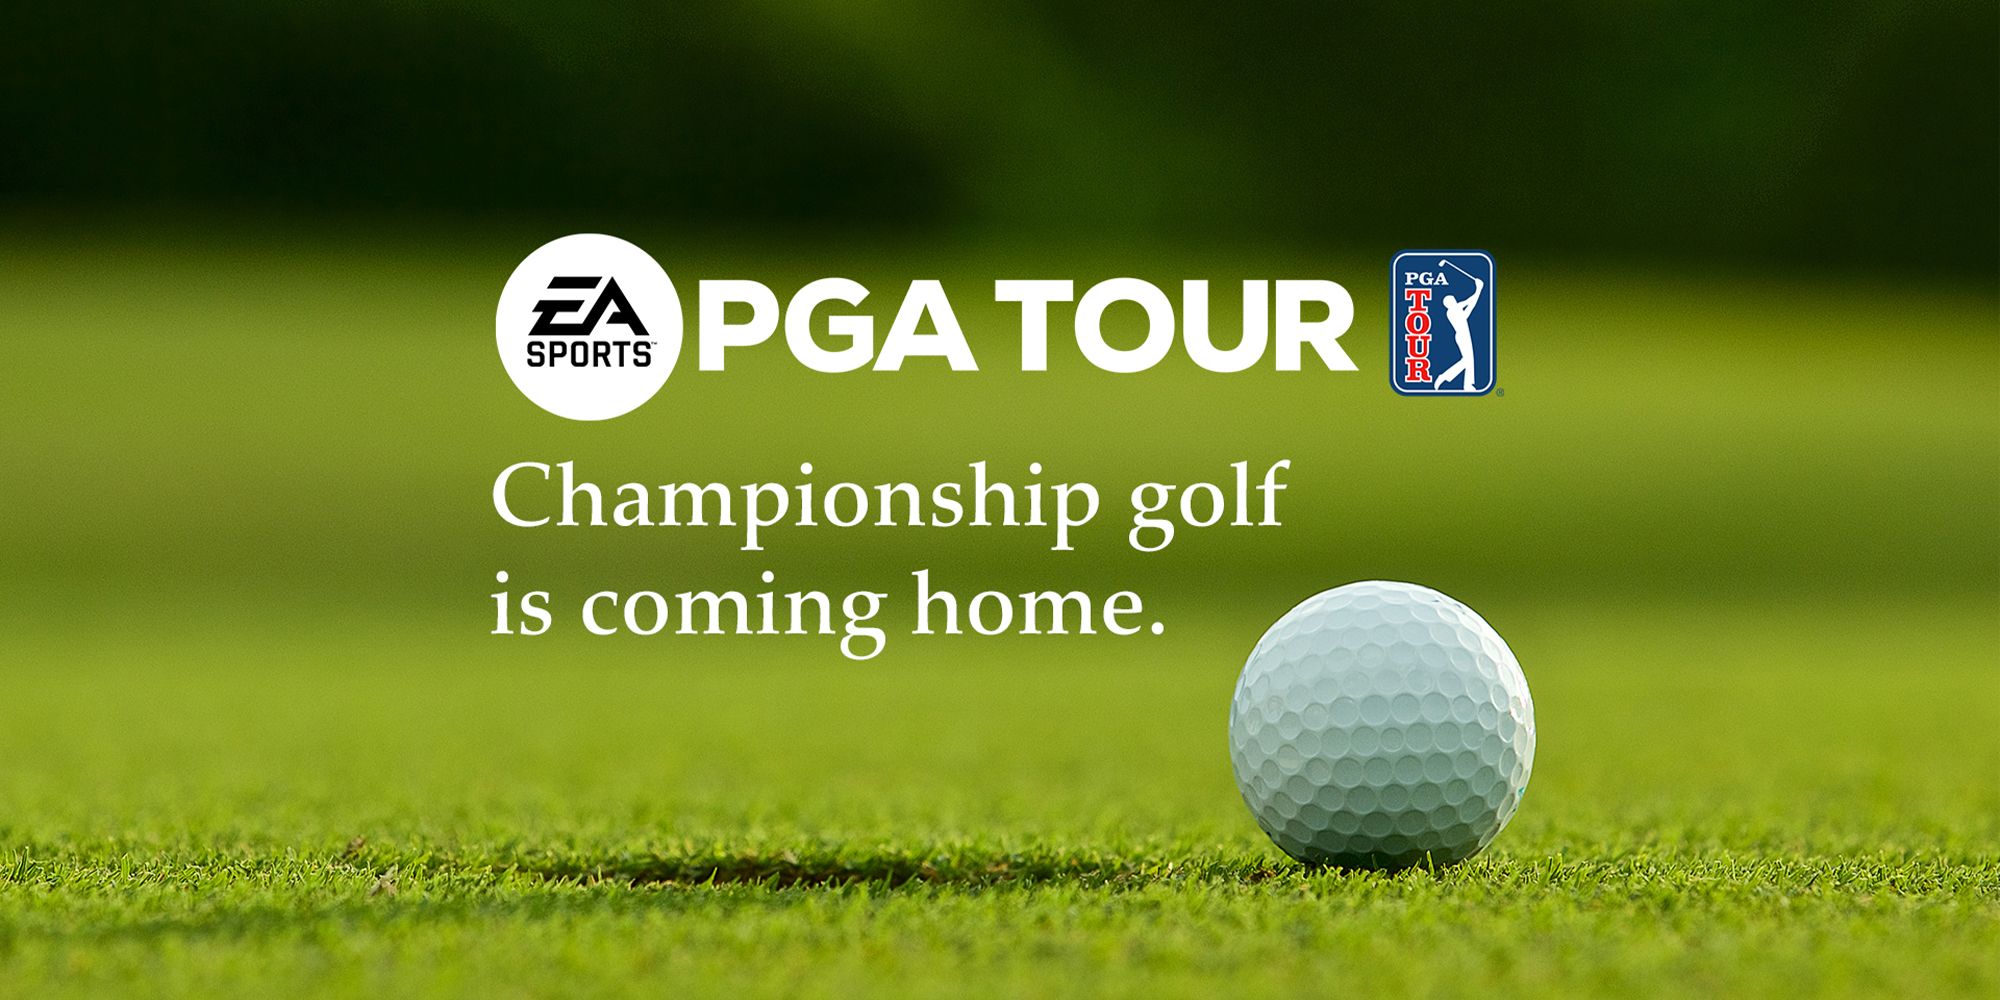 PGA Tour Golf Game Series Is Returning Under EA Sports